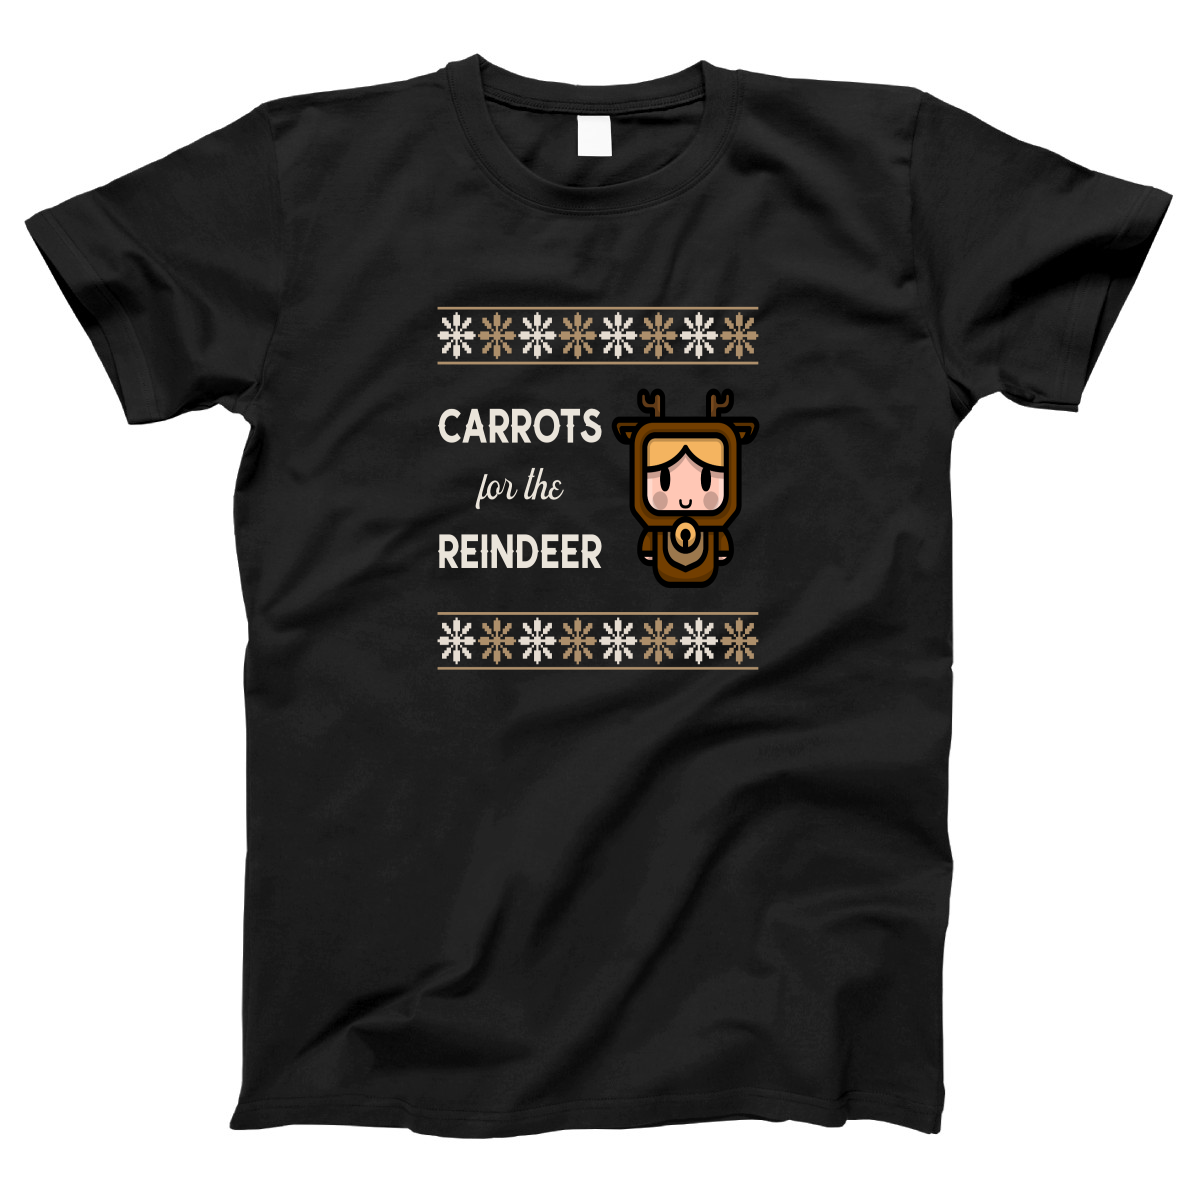 Carrots for the Reindeer Women's T-shirt | Black